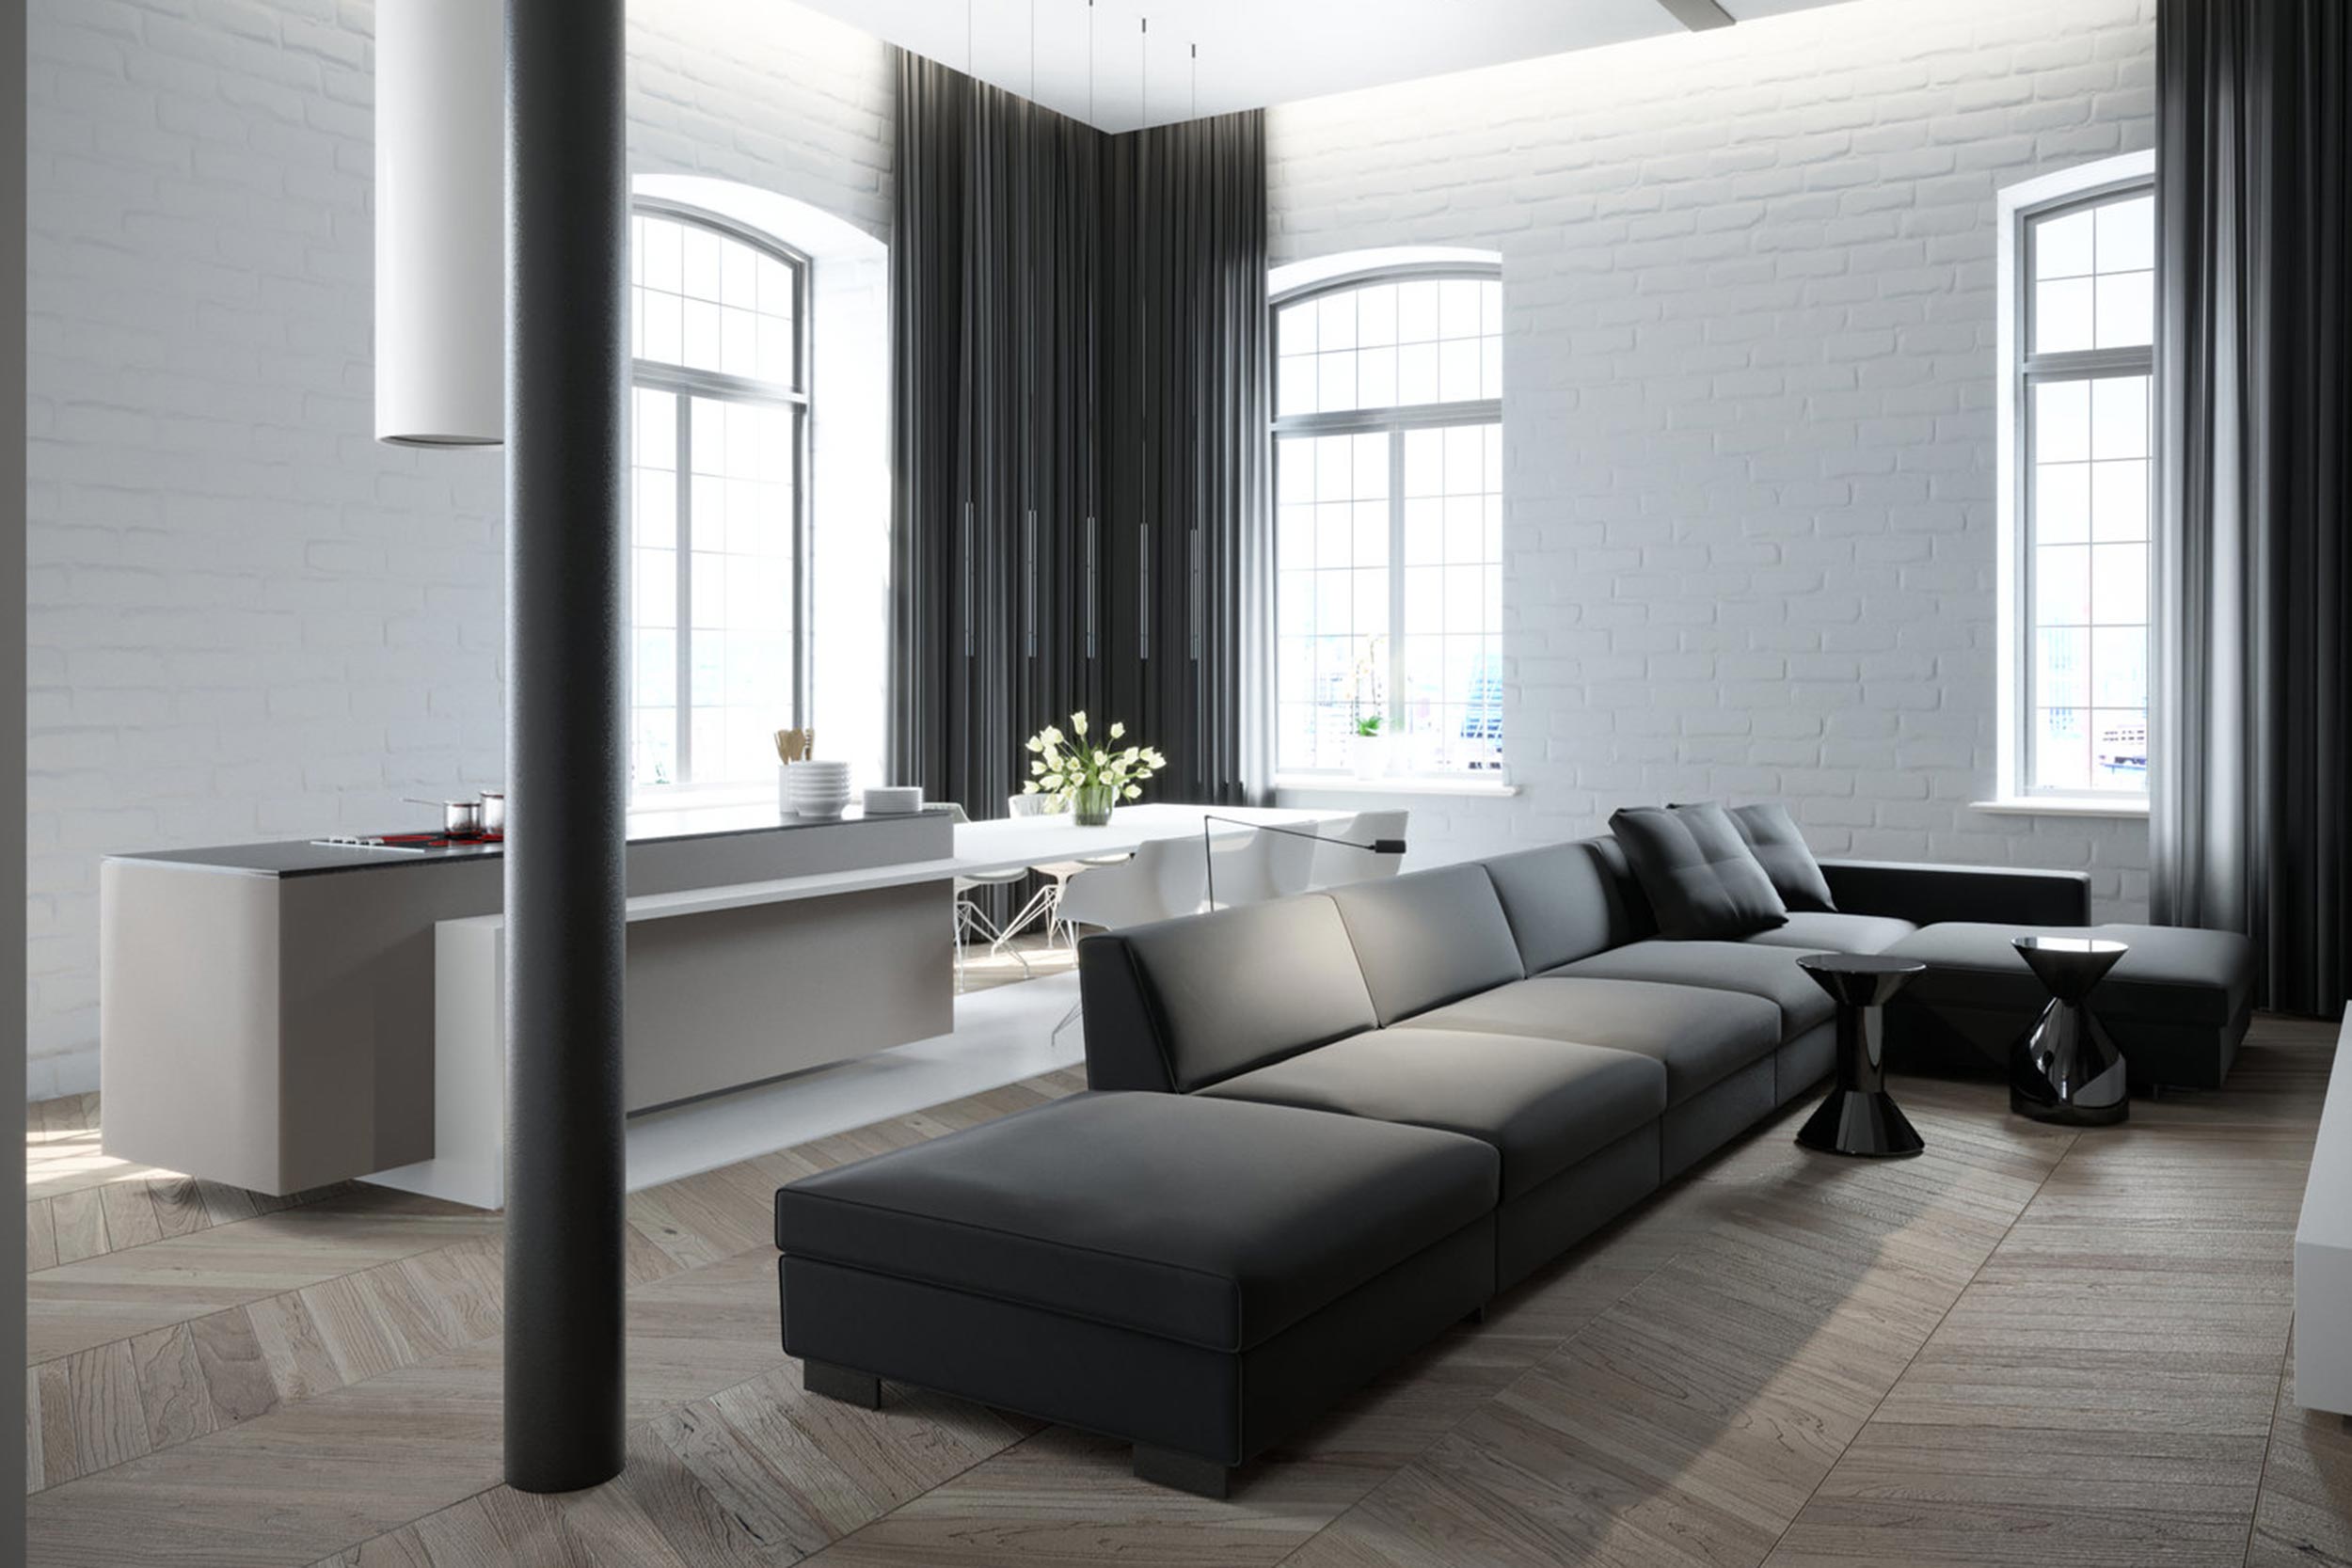 London Residential Property Development Loft Conversion Minimal Interior Design Inspiration Concept Visual by Unit4